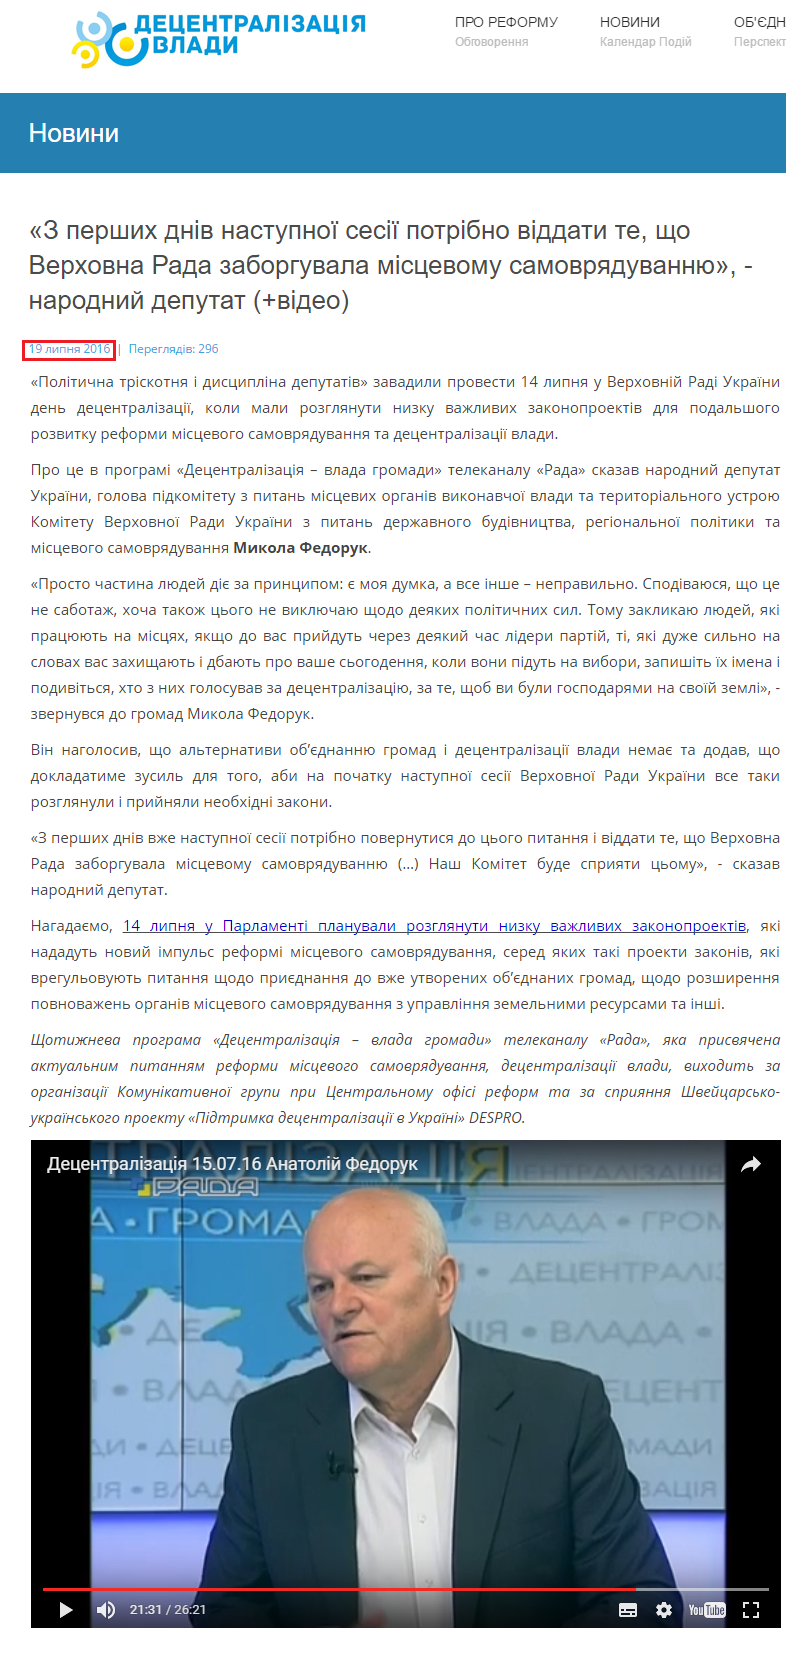 http://decentralization.gov.ua/news/item/id/2860